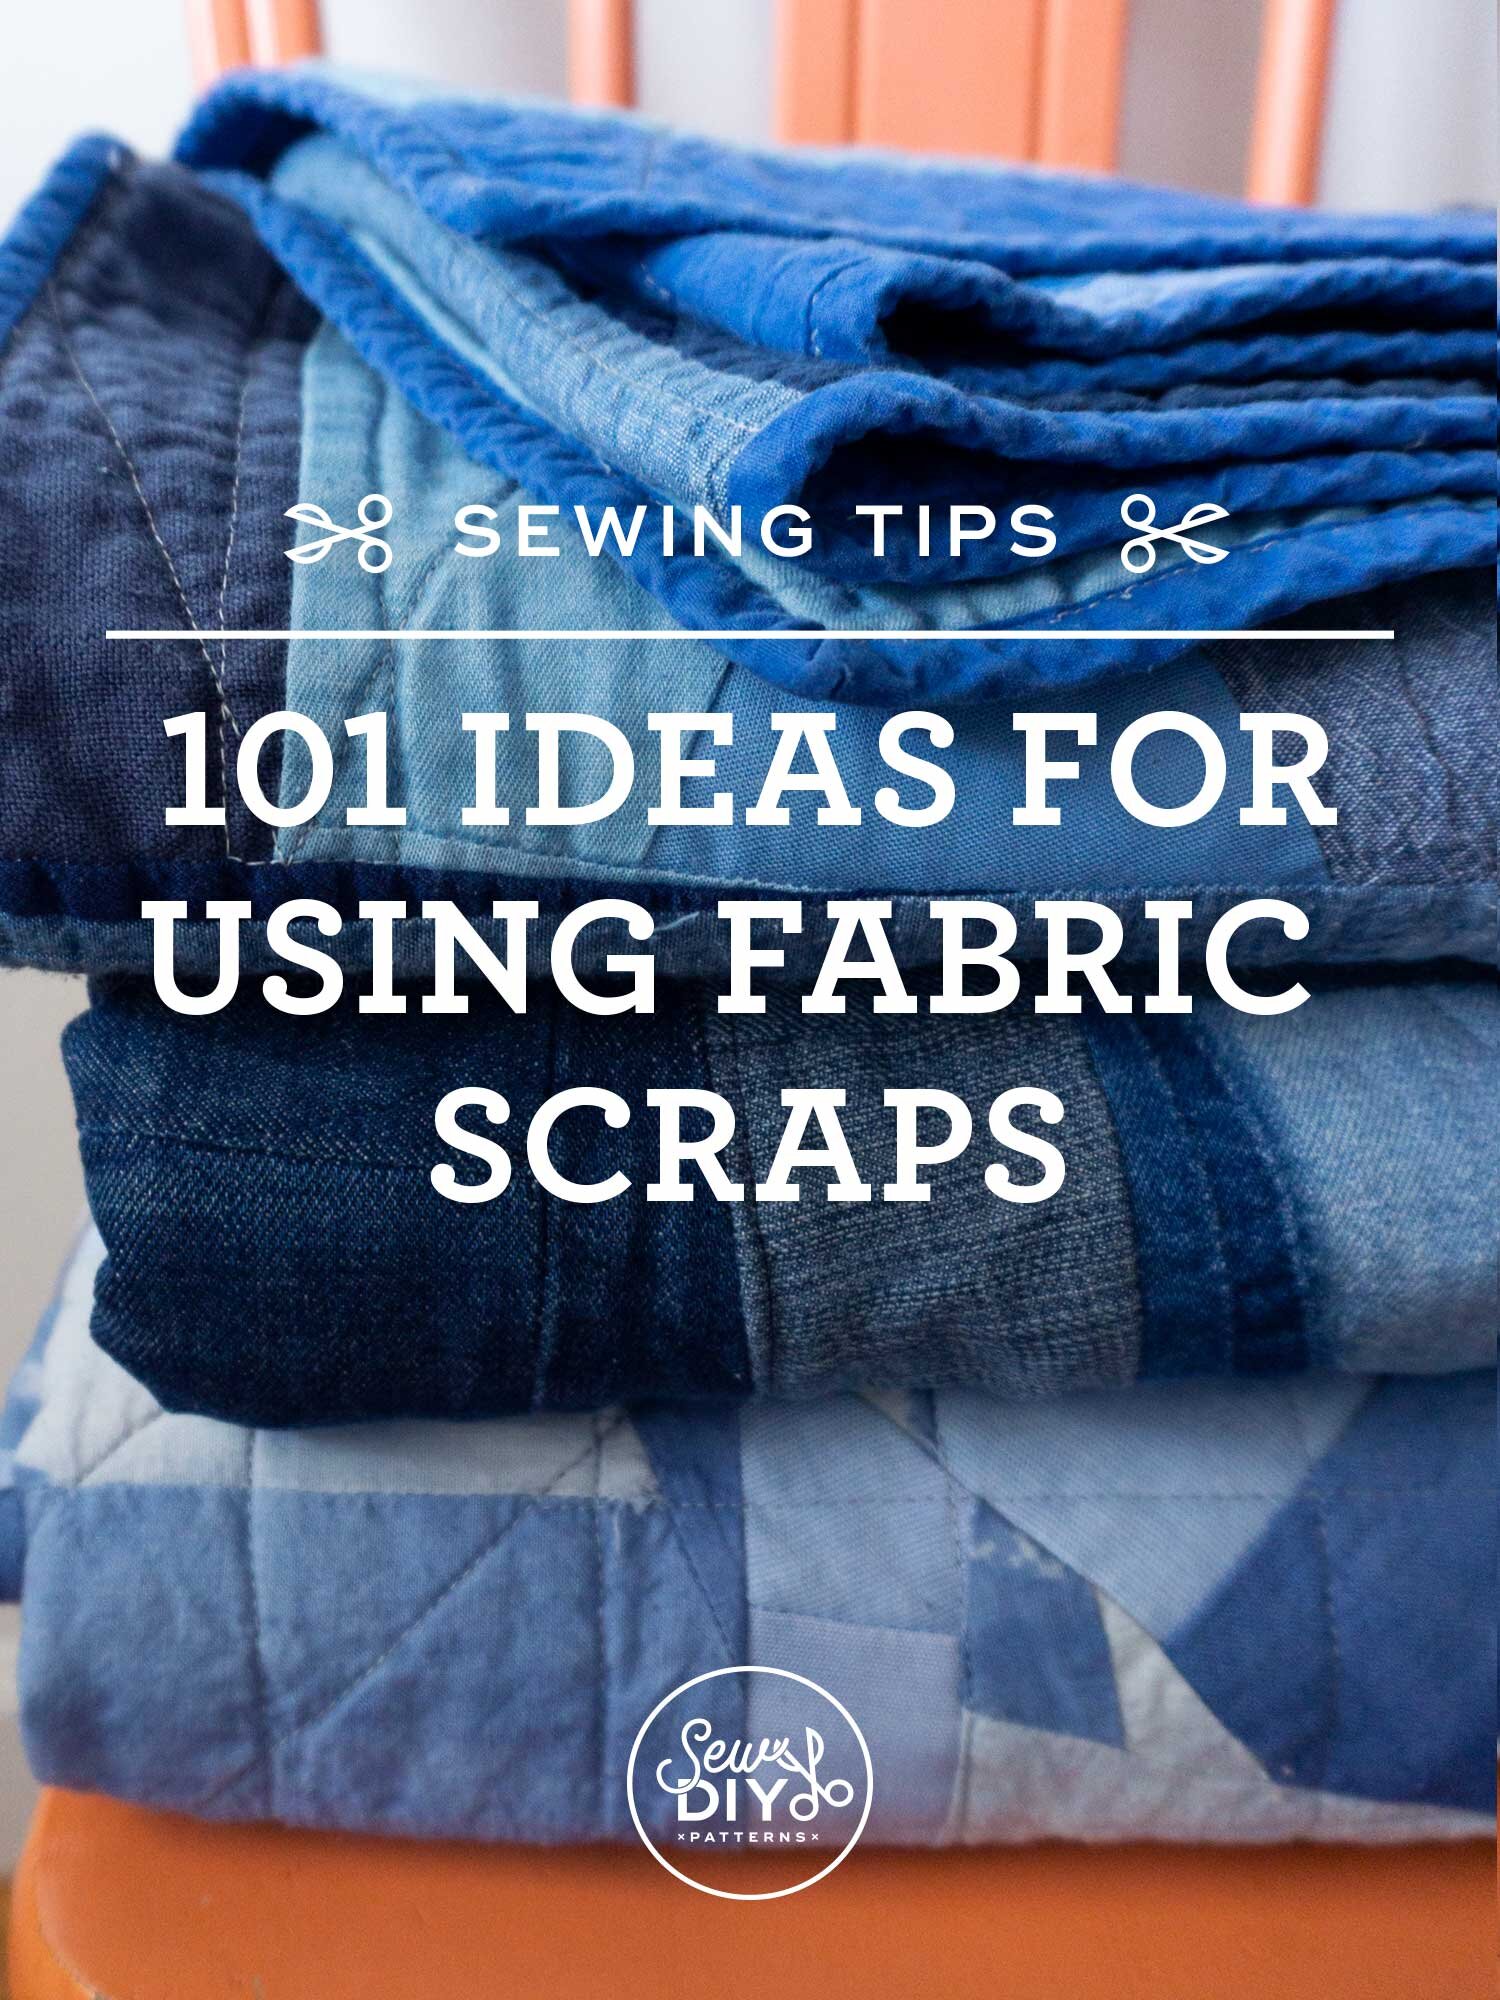 How to Sew Reusable Cloth Fabric Napkins Using Scrap Fabric